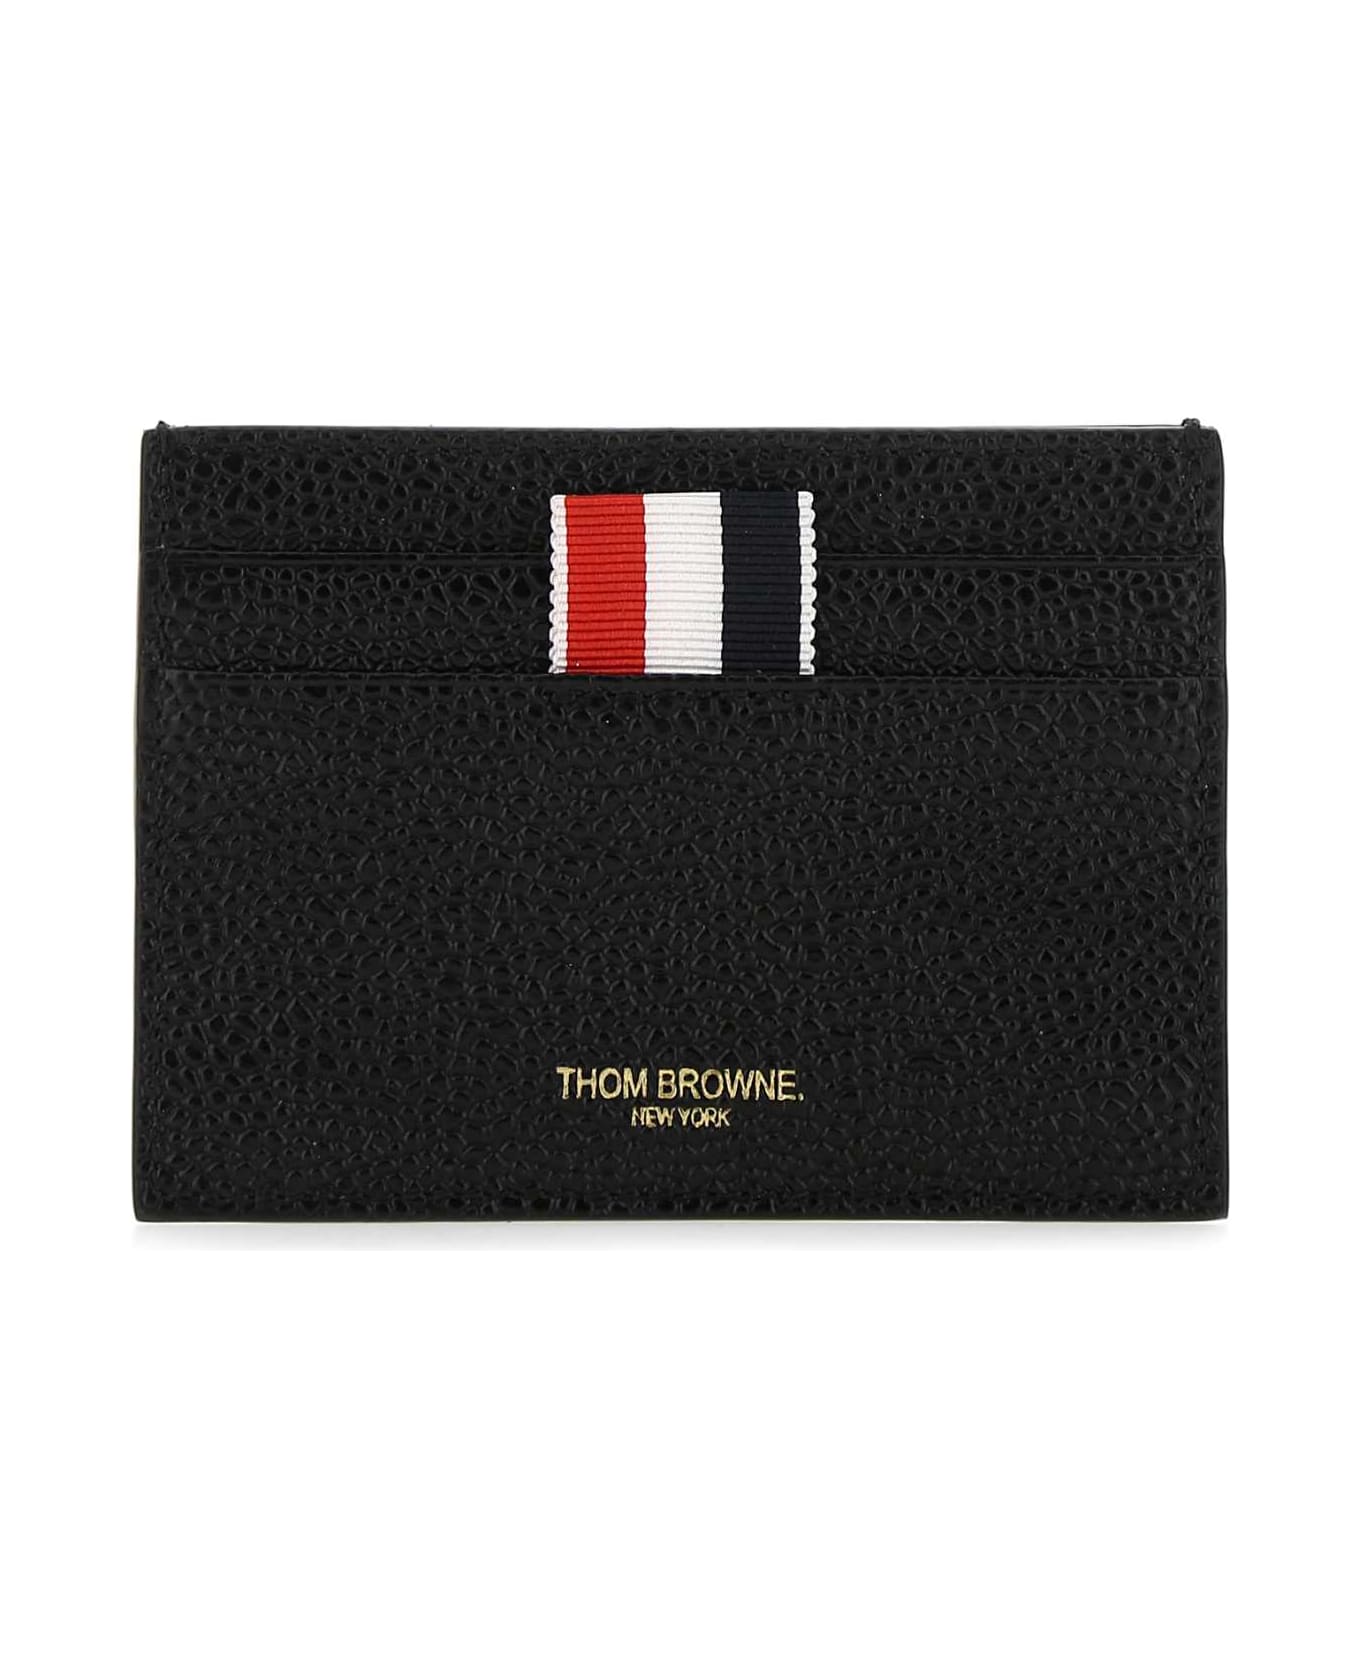 Thom Browne Black Leather Card Holder - 001 財布